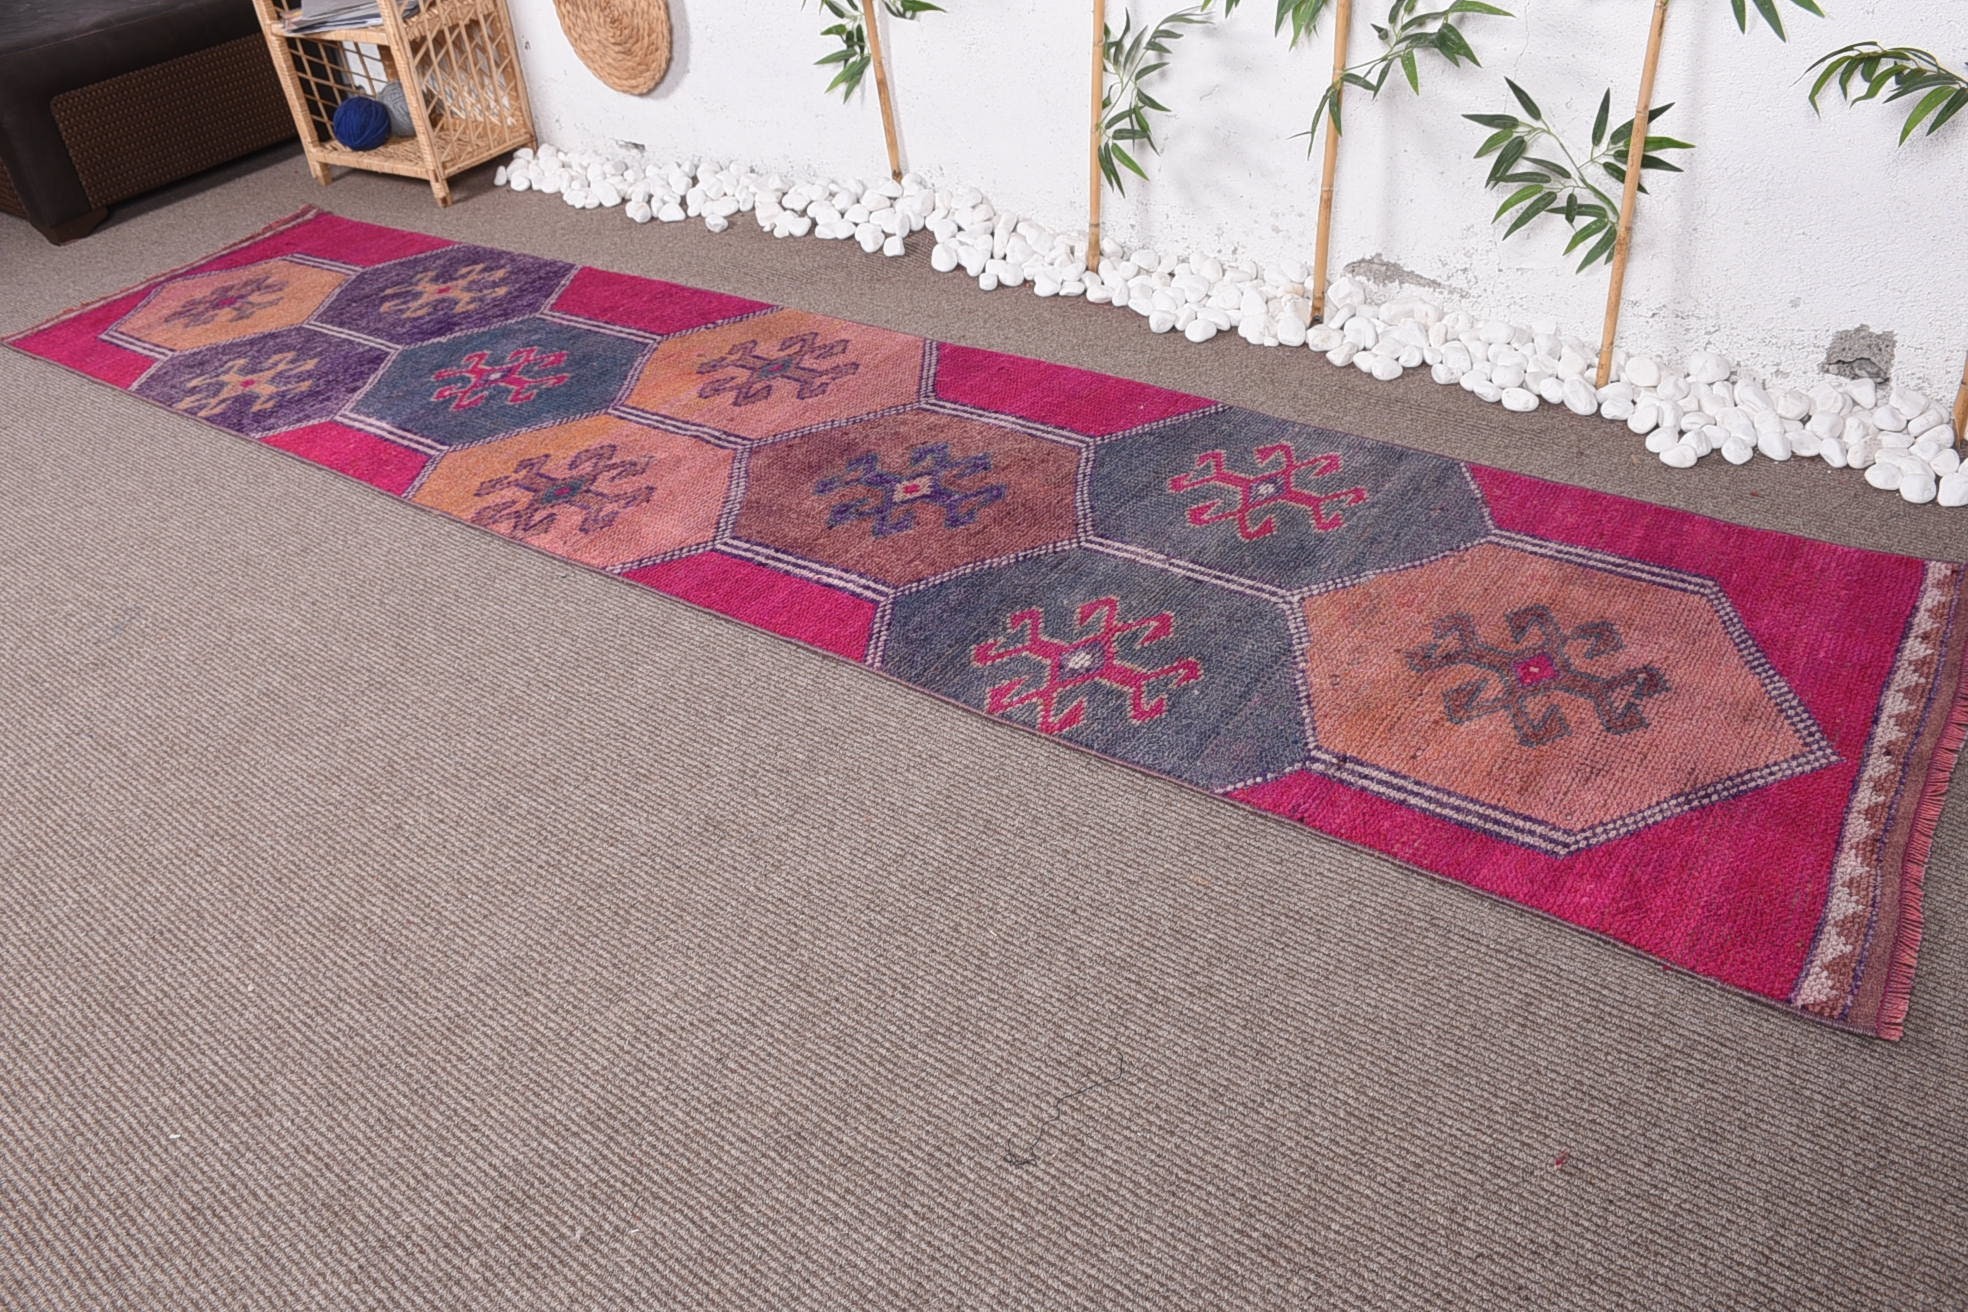 Anatolian Rugs, Hallway Rug, Ethnic Rugs, Pink Floor Rug, 2.2x10.9 ft Runner Rug, Vintage Rug, Kitchen Rugs, Turkish Rug